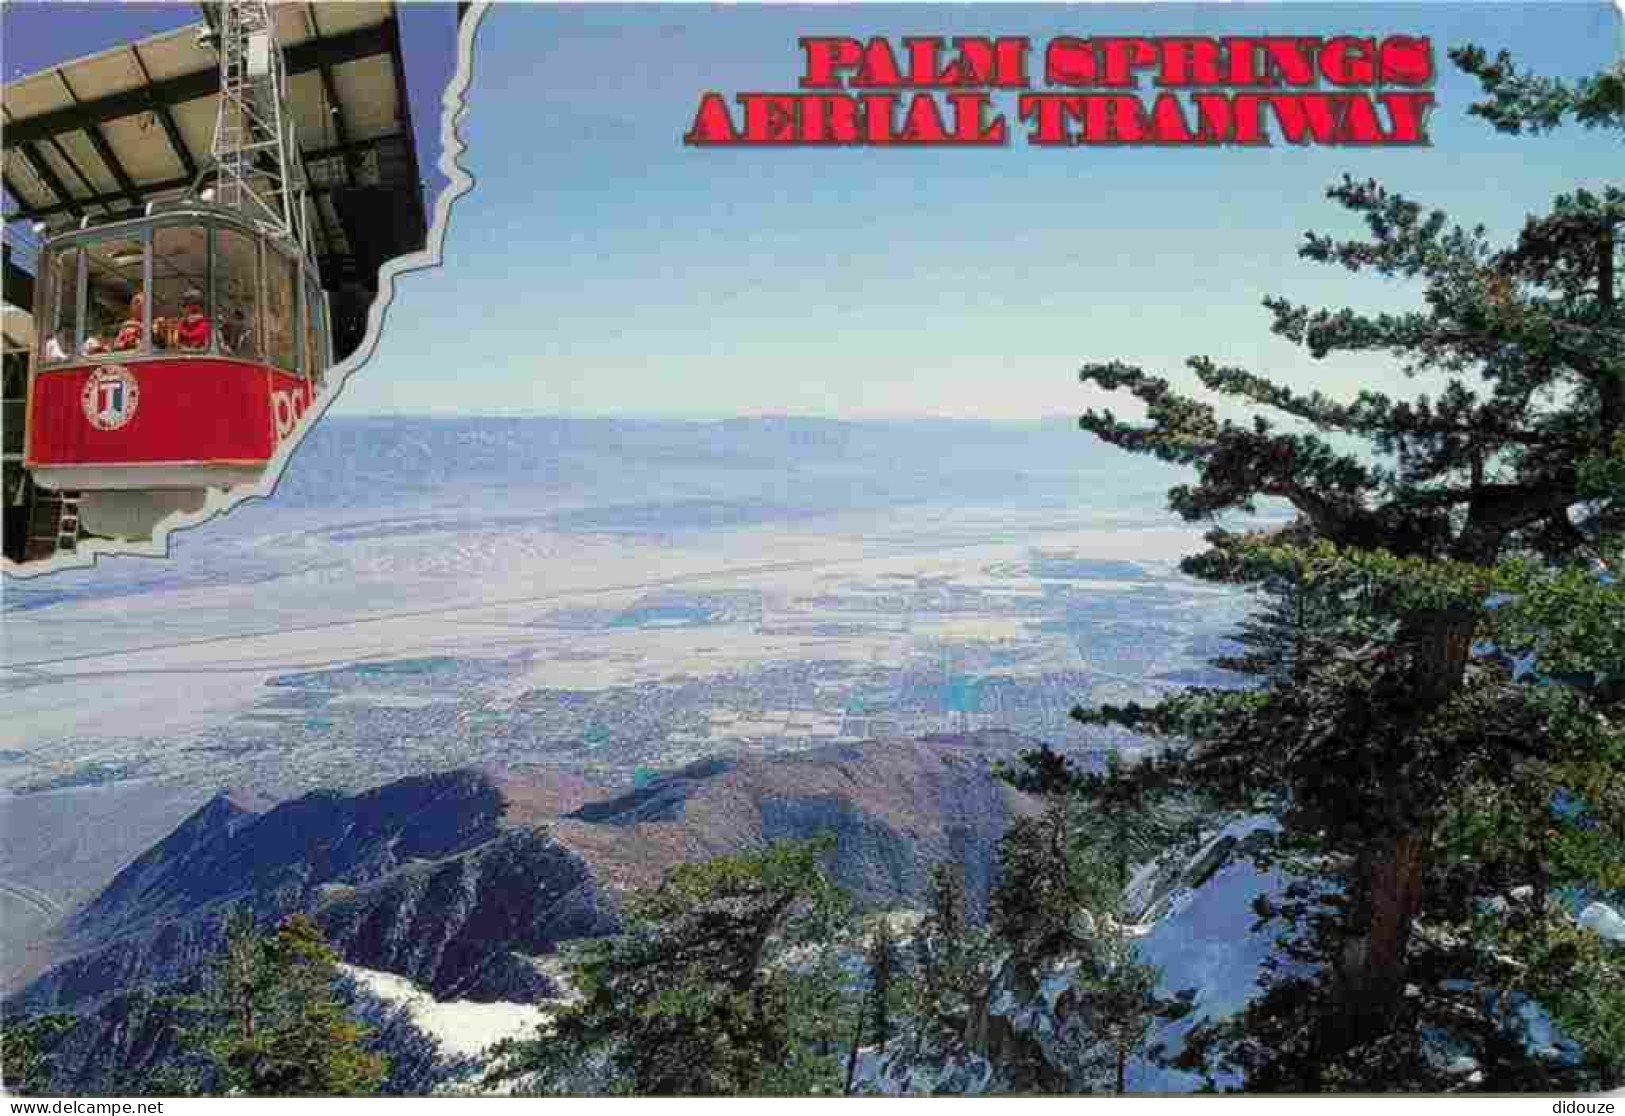 Etats Unis - Palm Springs - Aerial Tramway - Etat De Californie - California State - CPM - Carte Neuve - Voir Scans Rect - Palm Springs